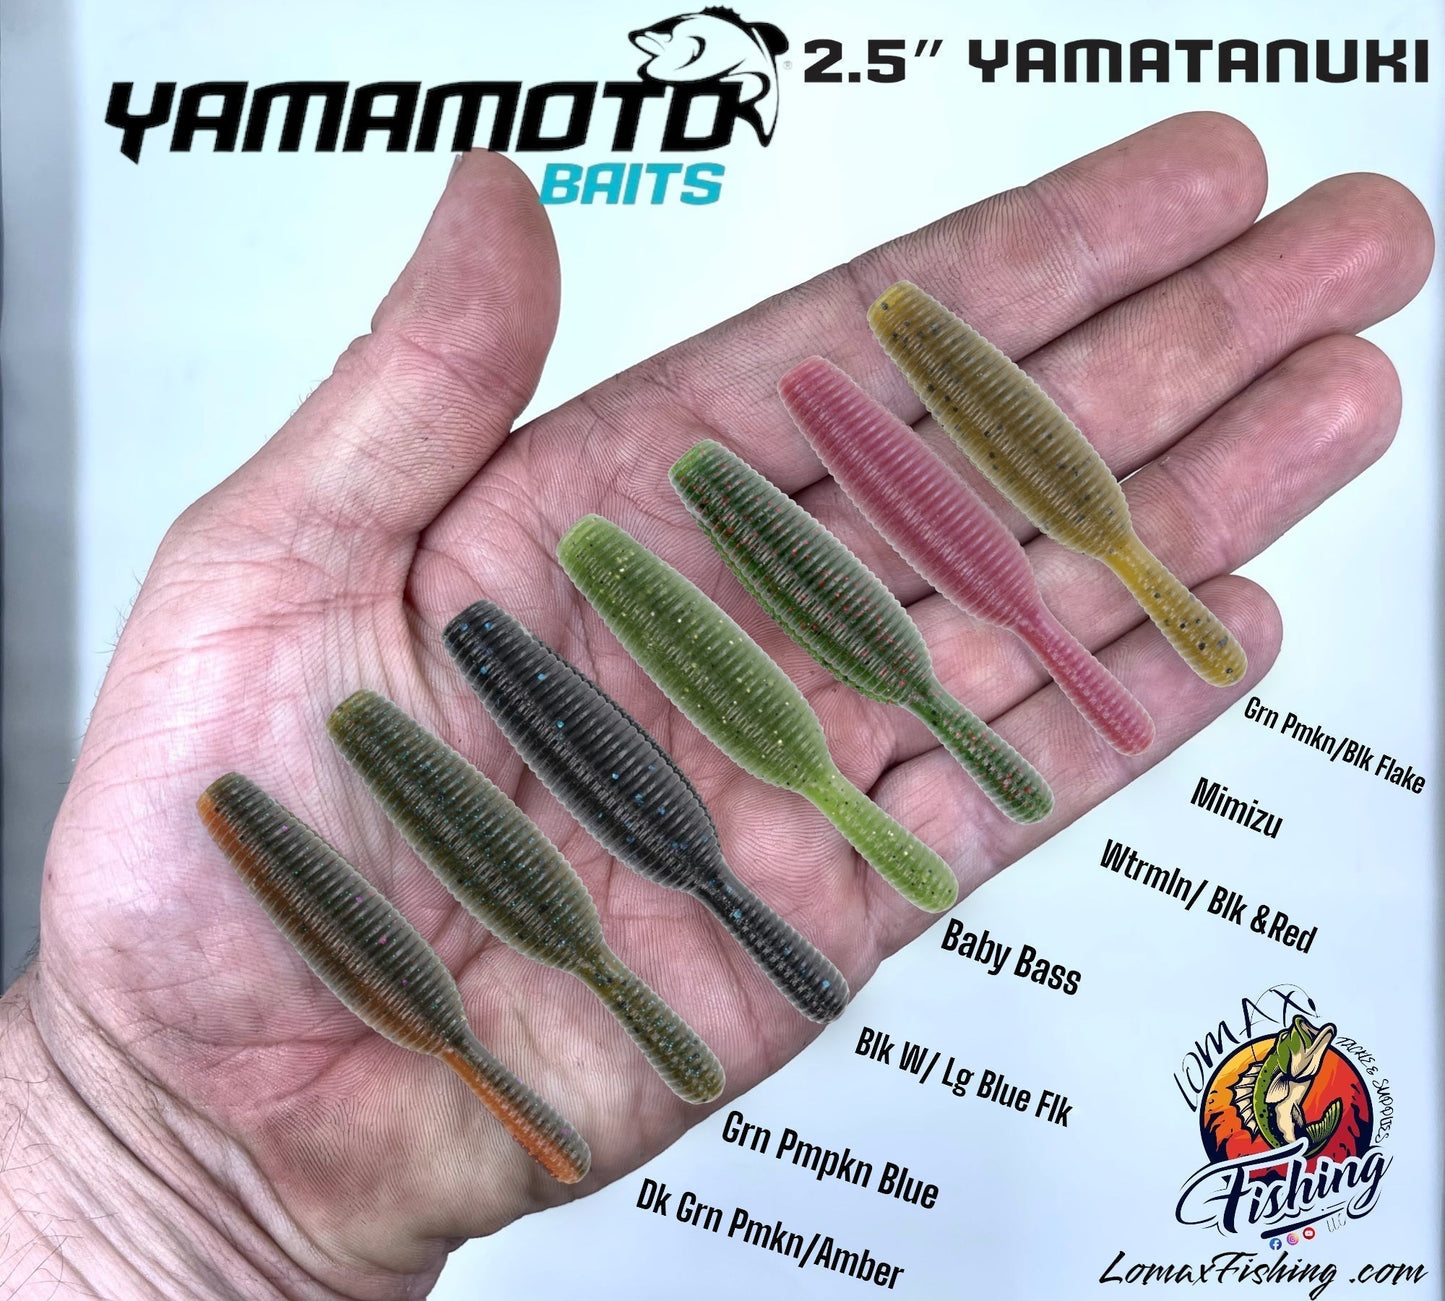 Yamamoto Releases New Smaller Yamatanuki - Wired2Fish